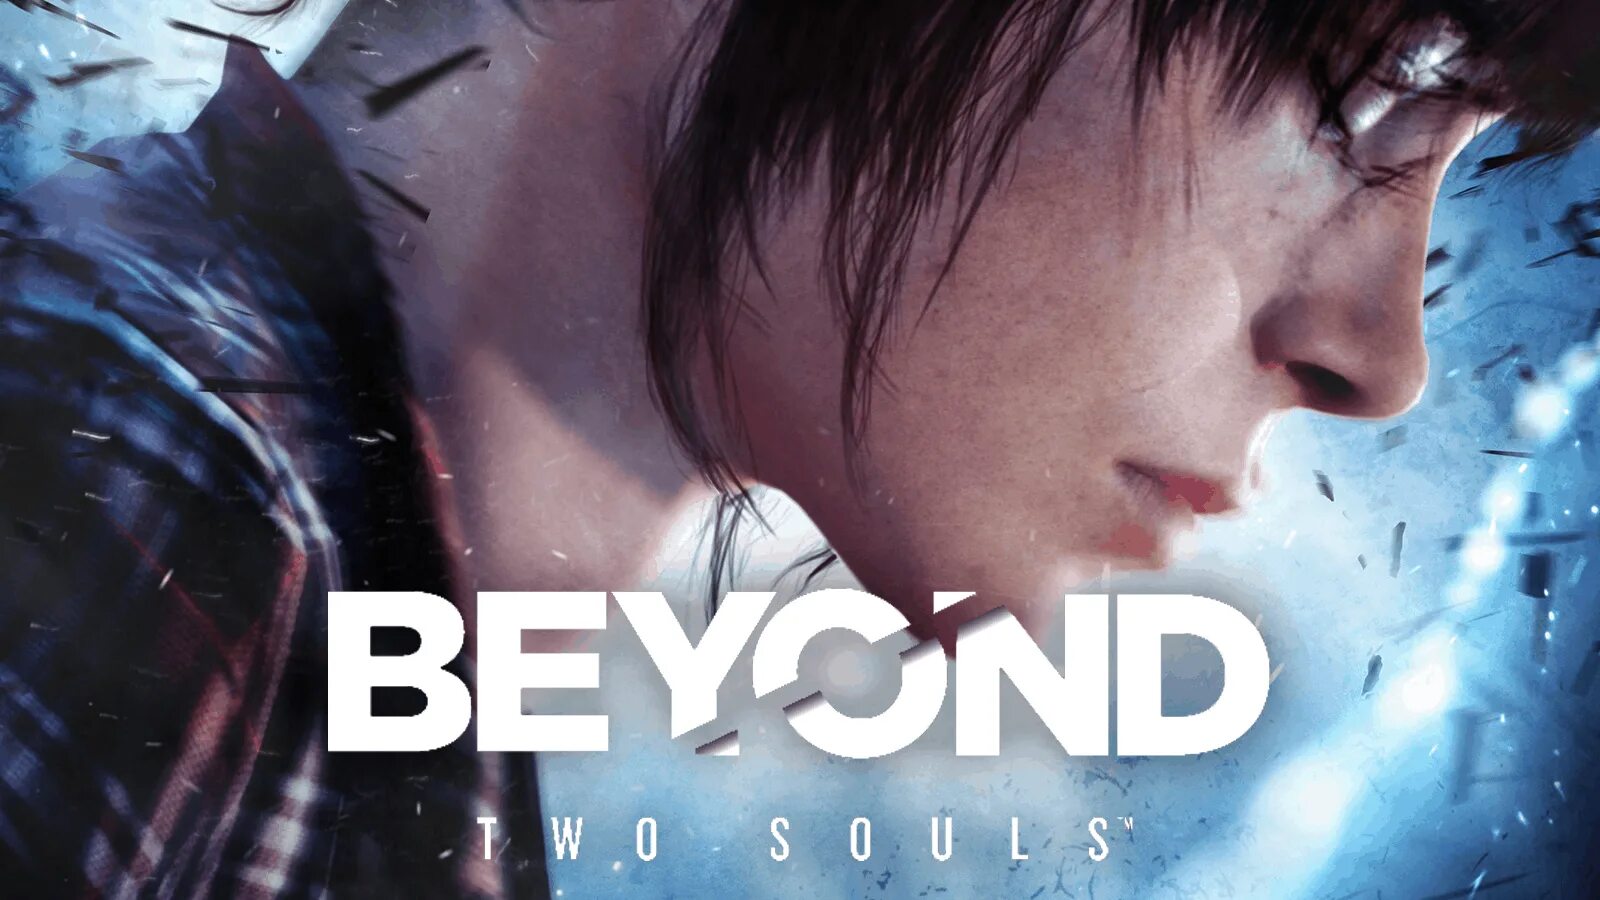 Игра за гранью 2 души. За гранью: две души / Beyond: two Souls. Джоди Холмс Beyond two Souls. Игра Beyond: two Souls Постер.